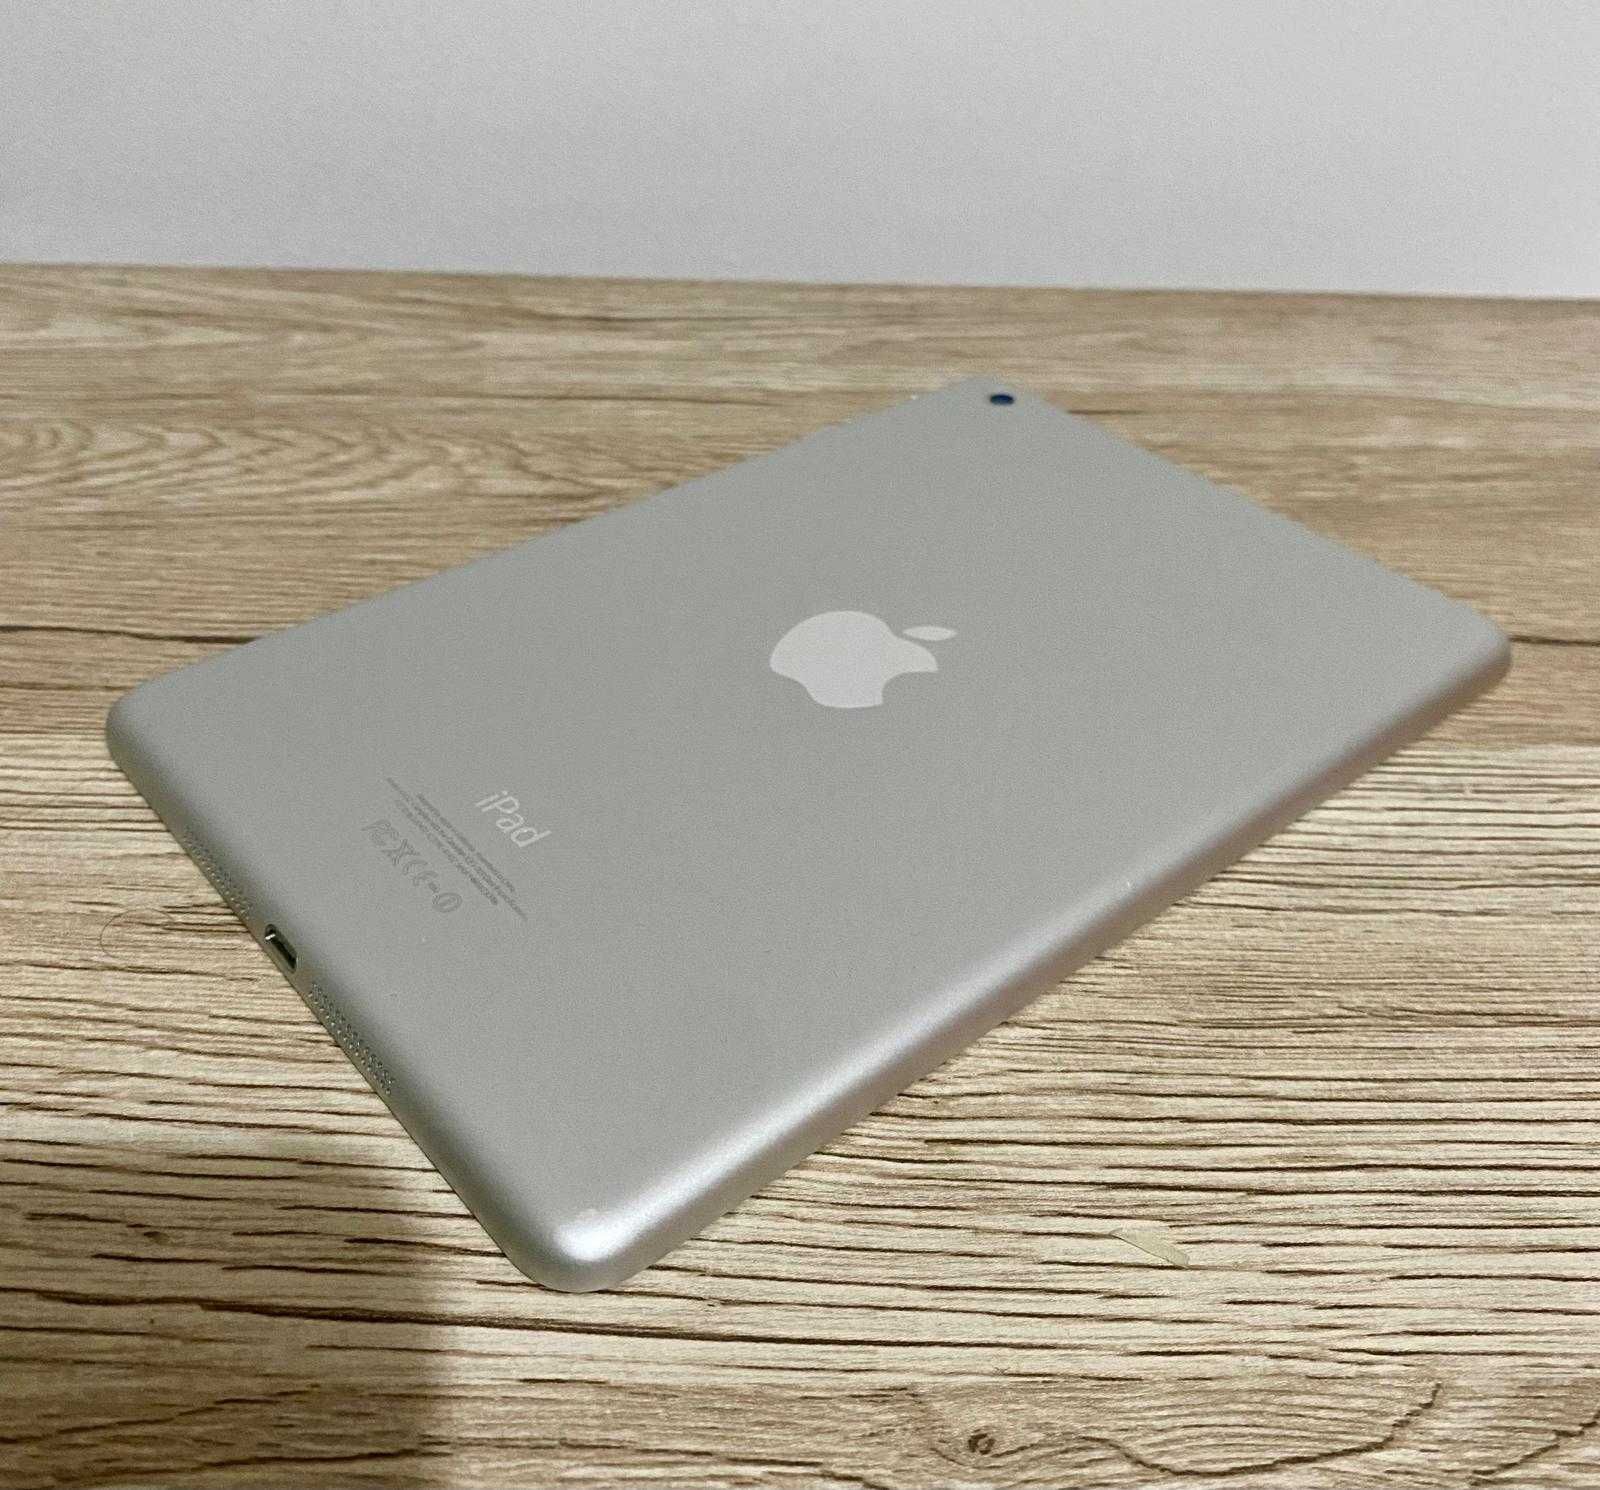 | Apple iPad Mini 1 Wi-Fi | 16 GB | IOS 9.3.5 | Impecabil | Colectie |